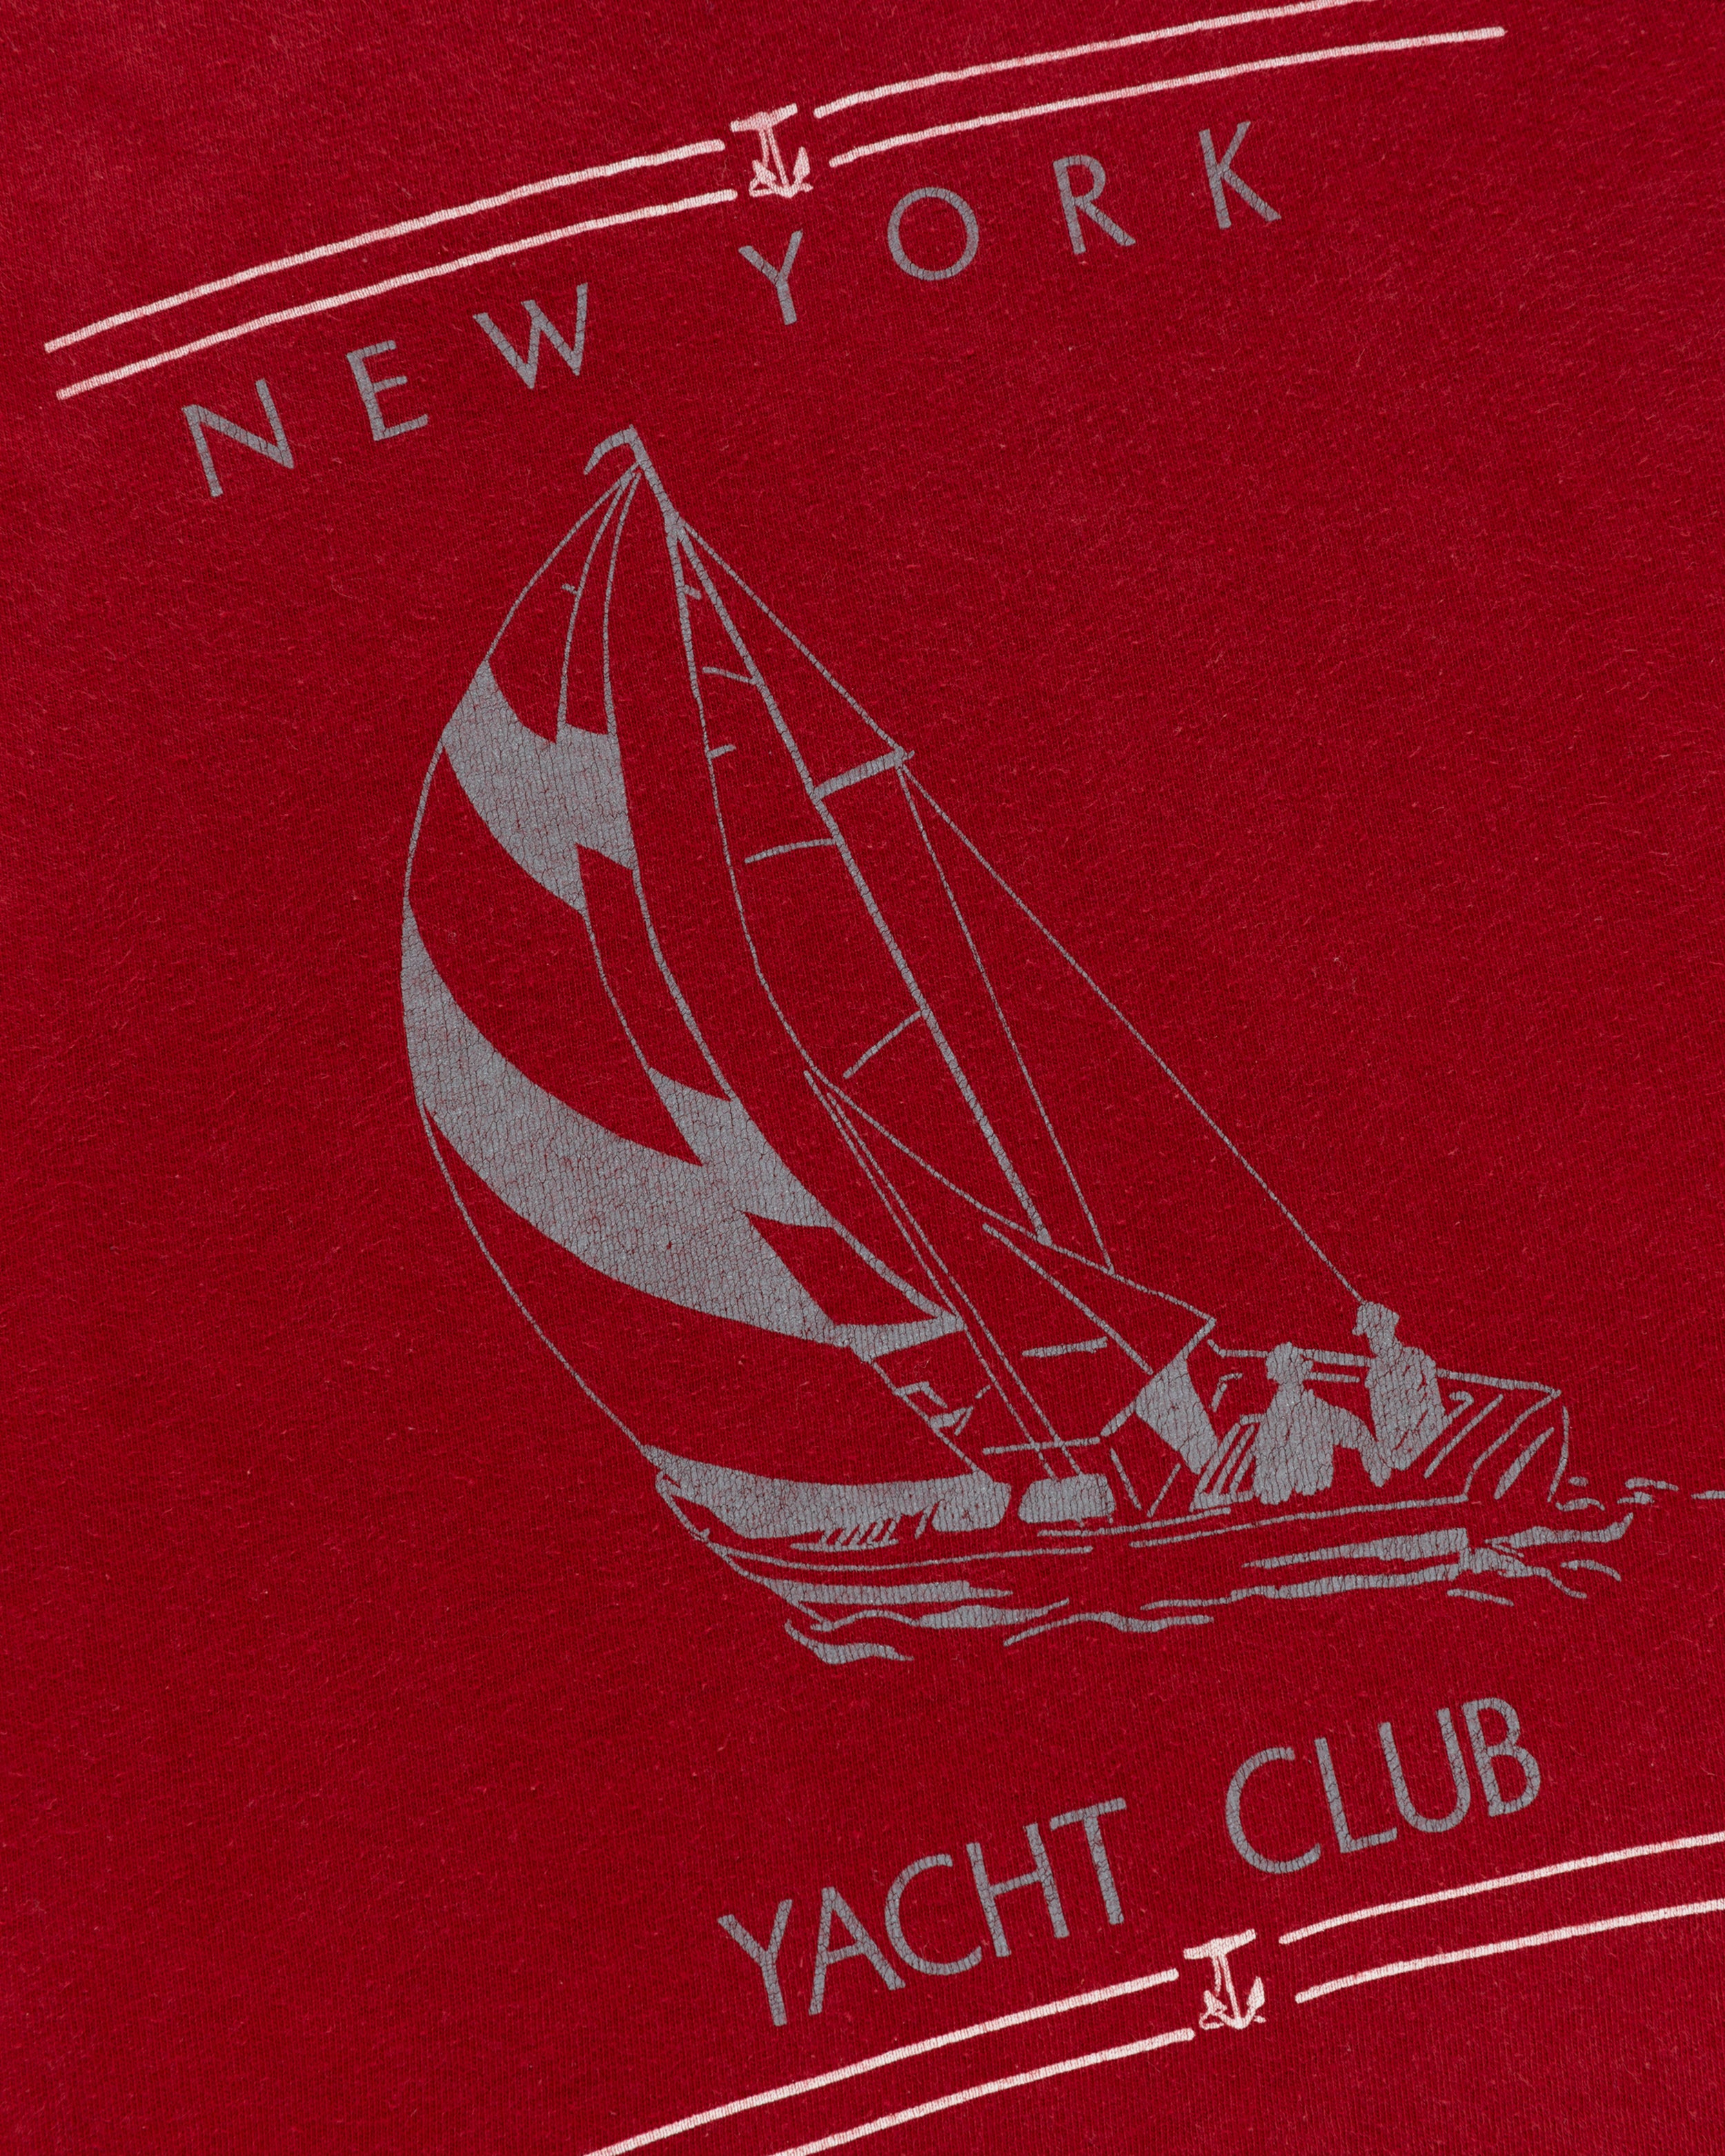 Vintage New York City Yacht Club Tee